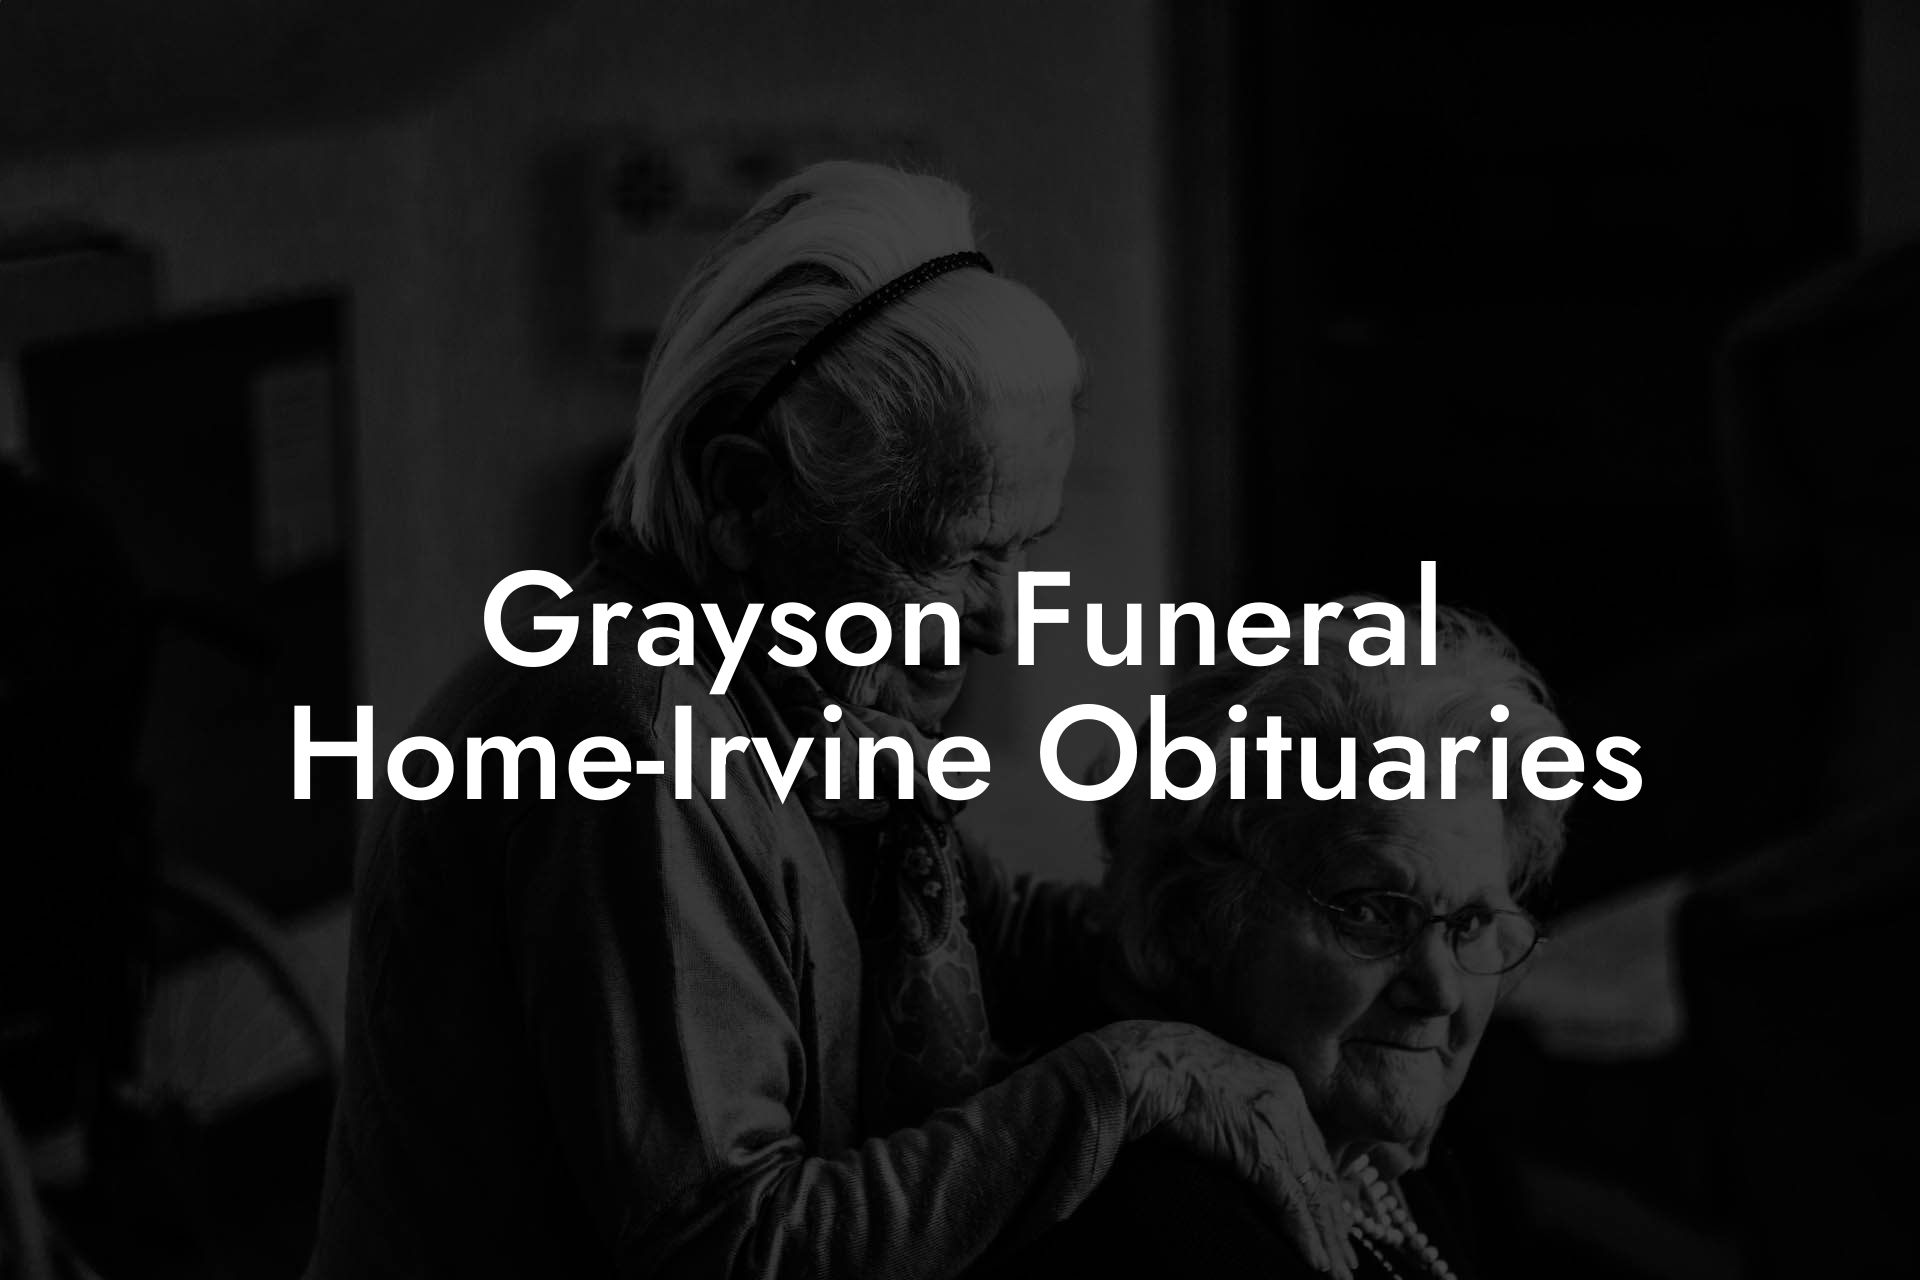 Grayson Funeral Home-Irvine Obituaries